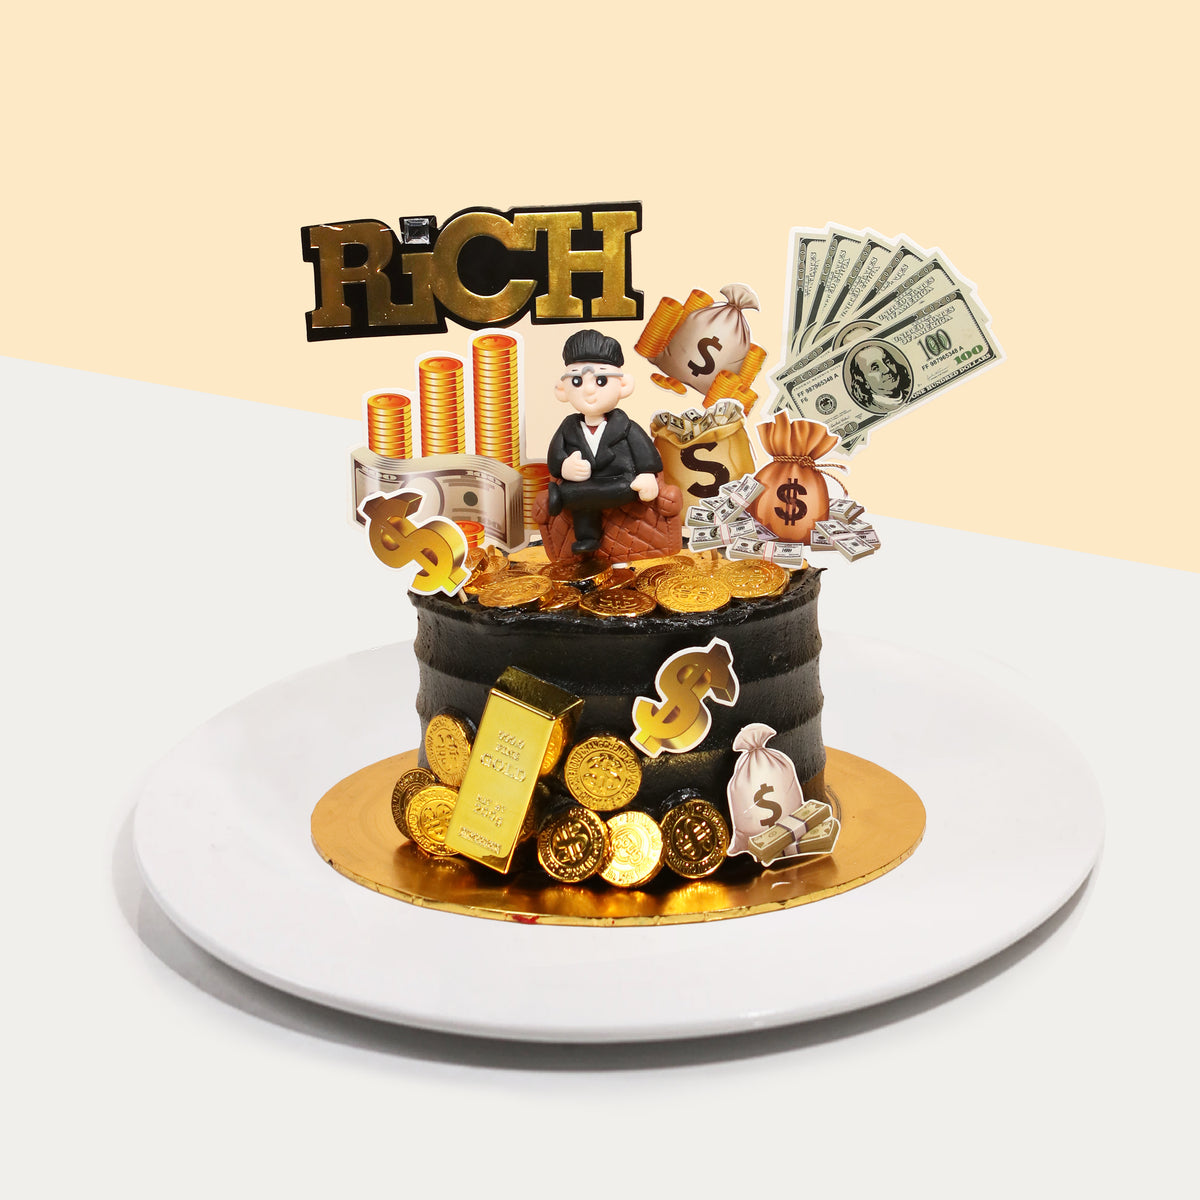 Baby Boss Cake | Birthday Cakes | Best Cakes | Mums Kitchen